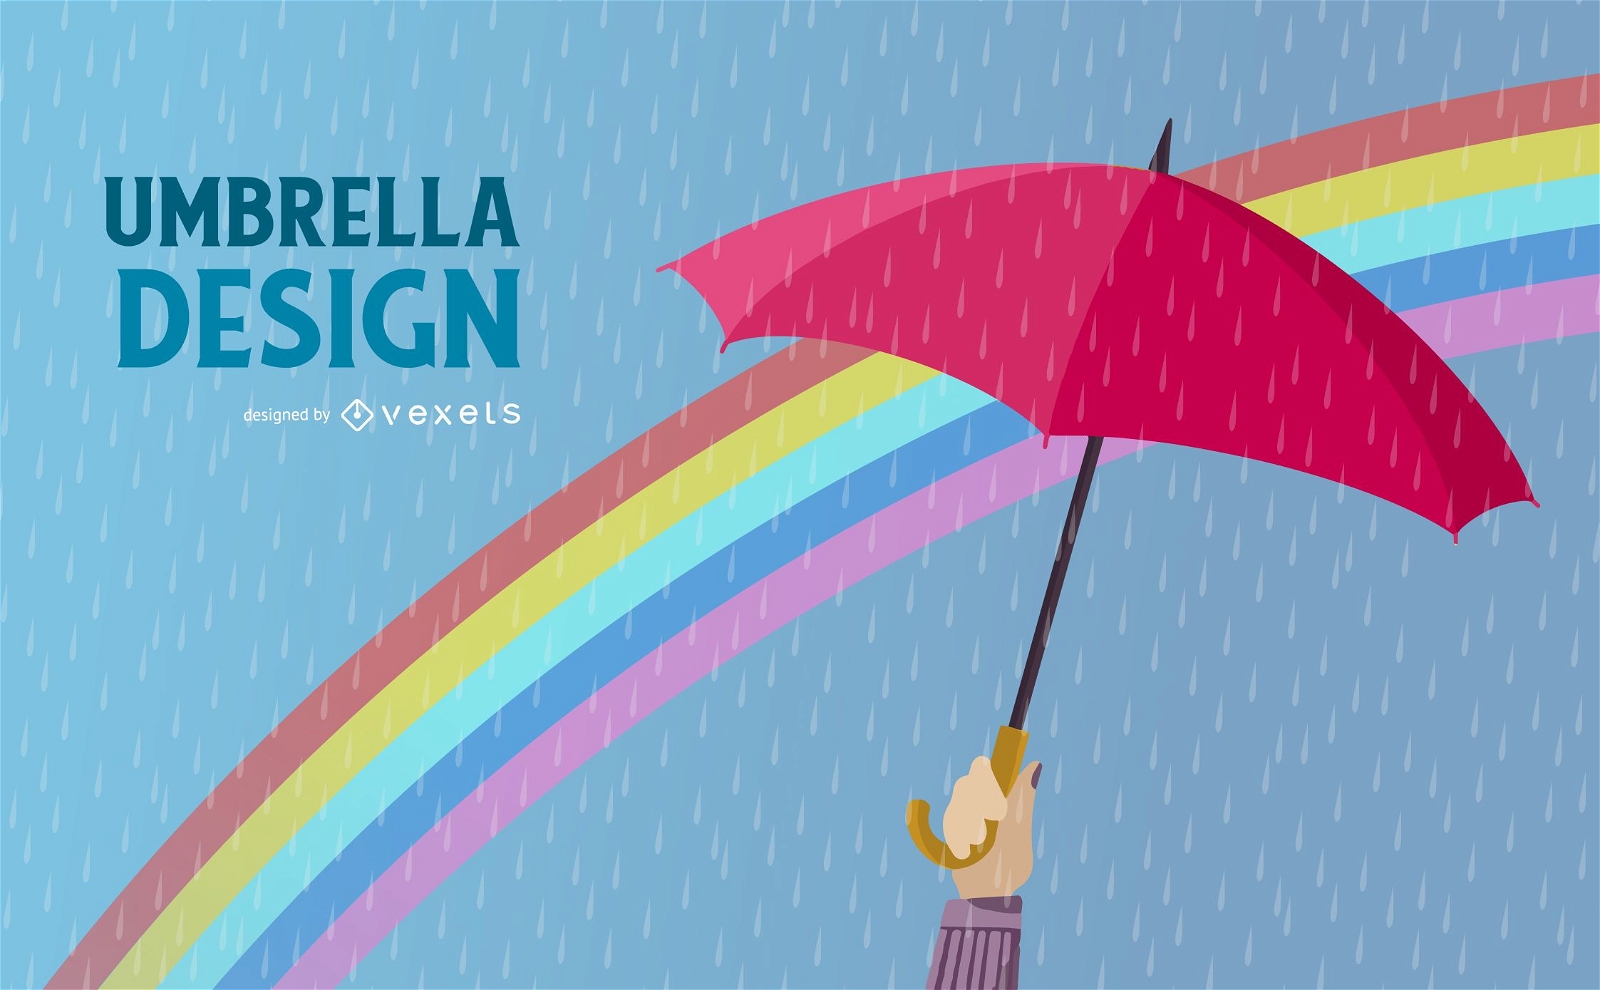 Design de ilustra??o de guarda-chuva chuvoso